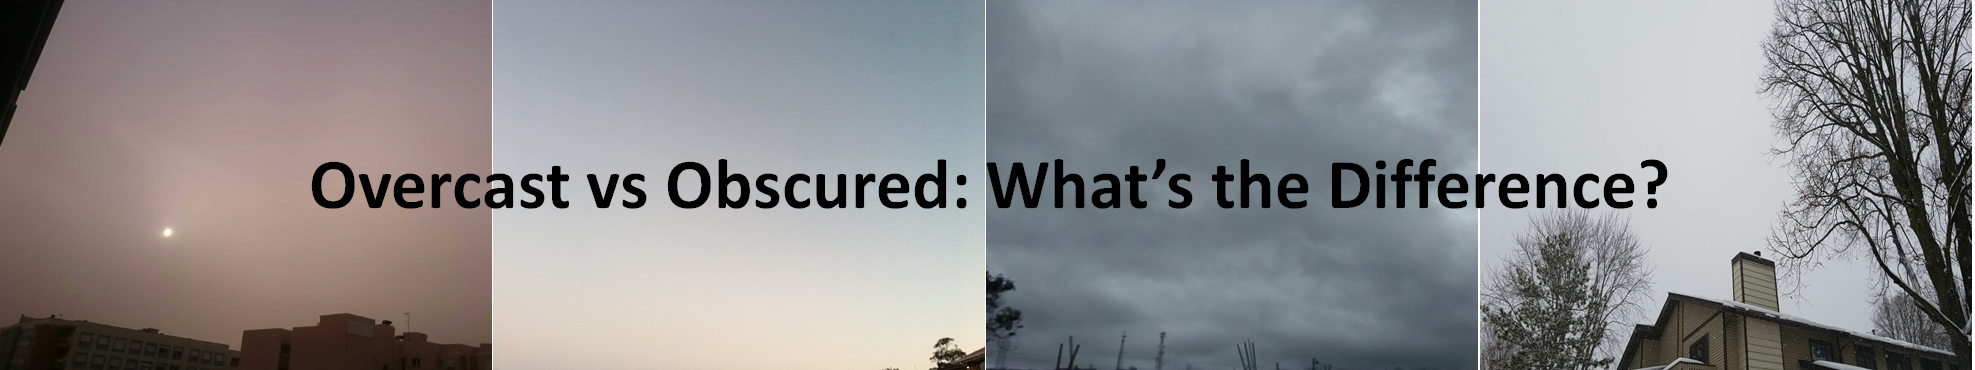 Image of Obscured Sky vs Overcast Sky